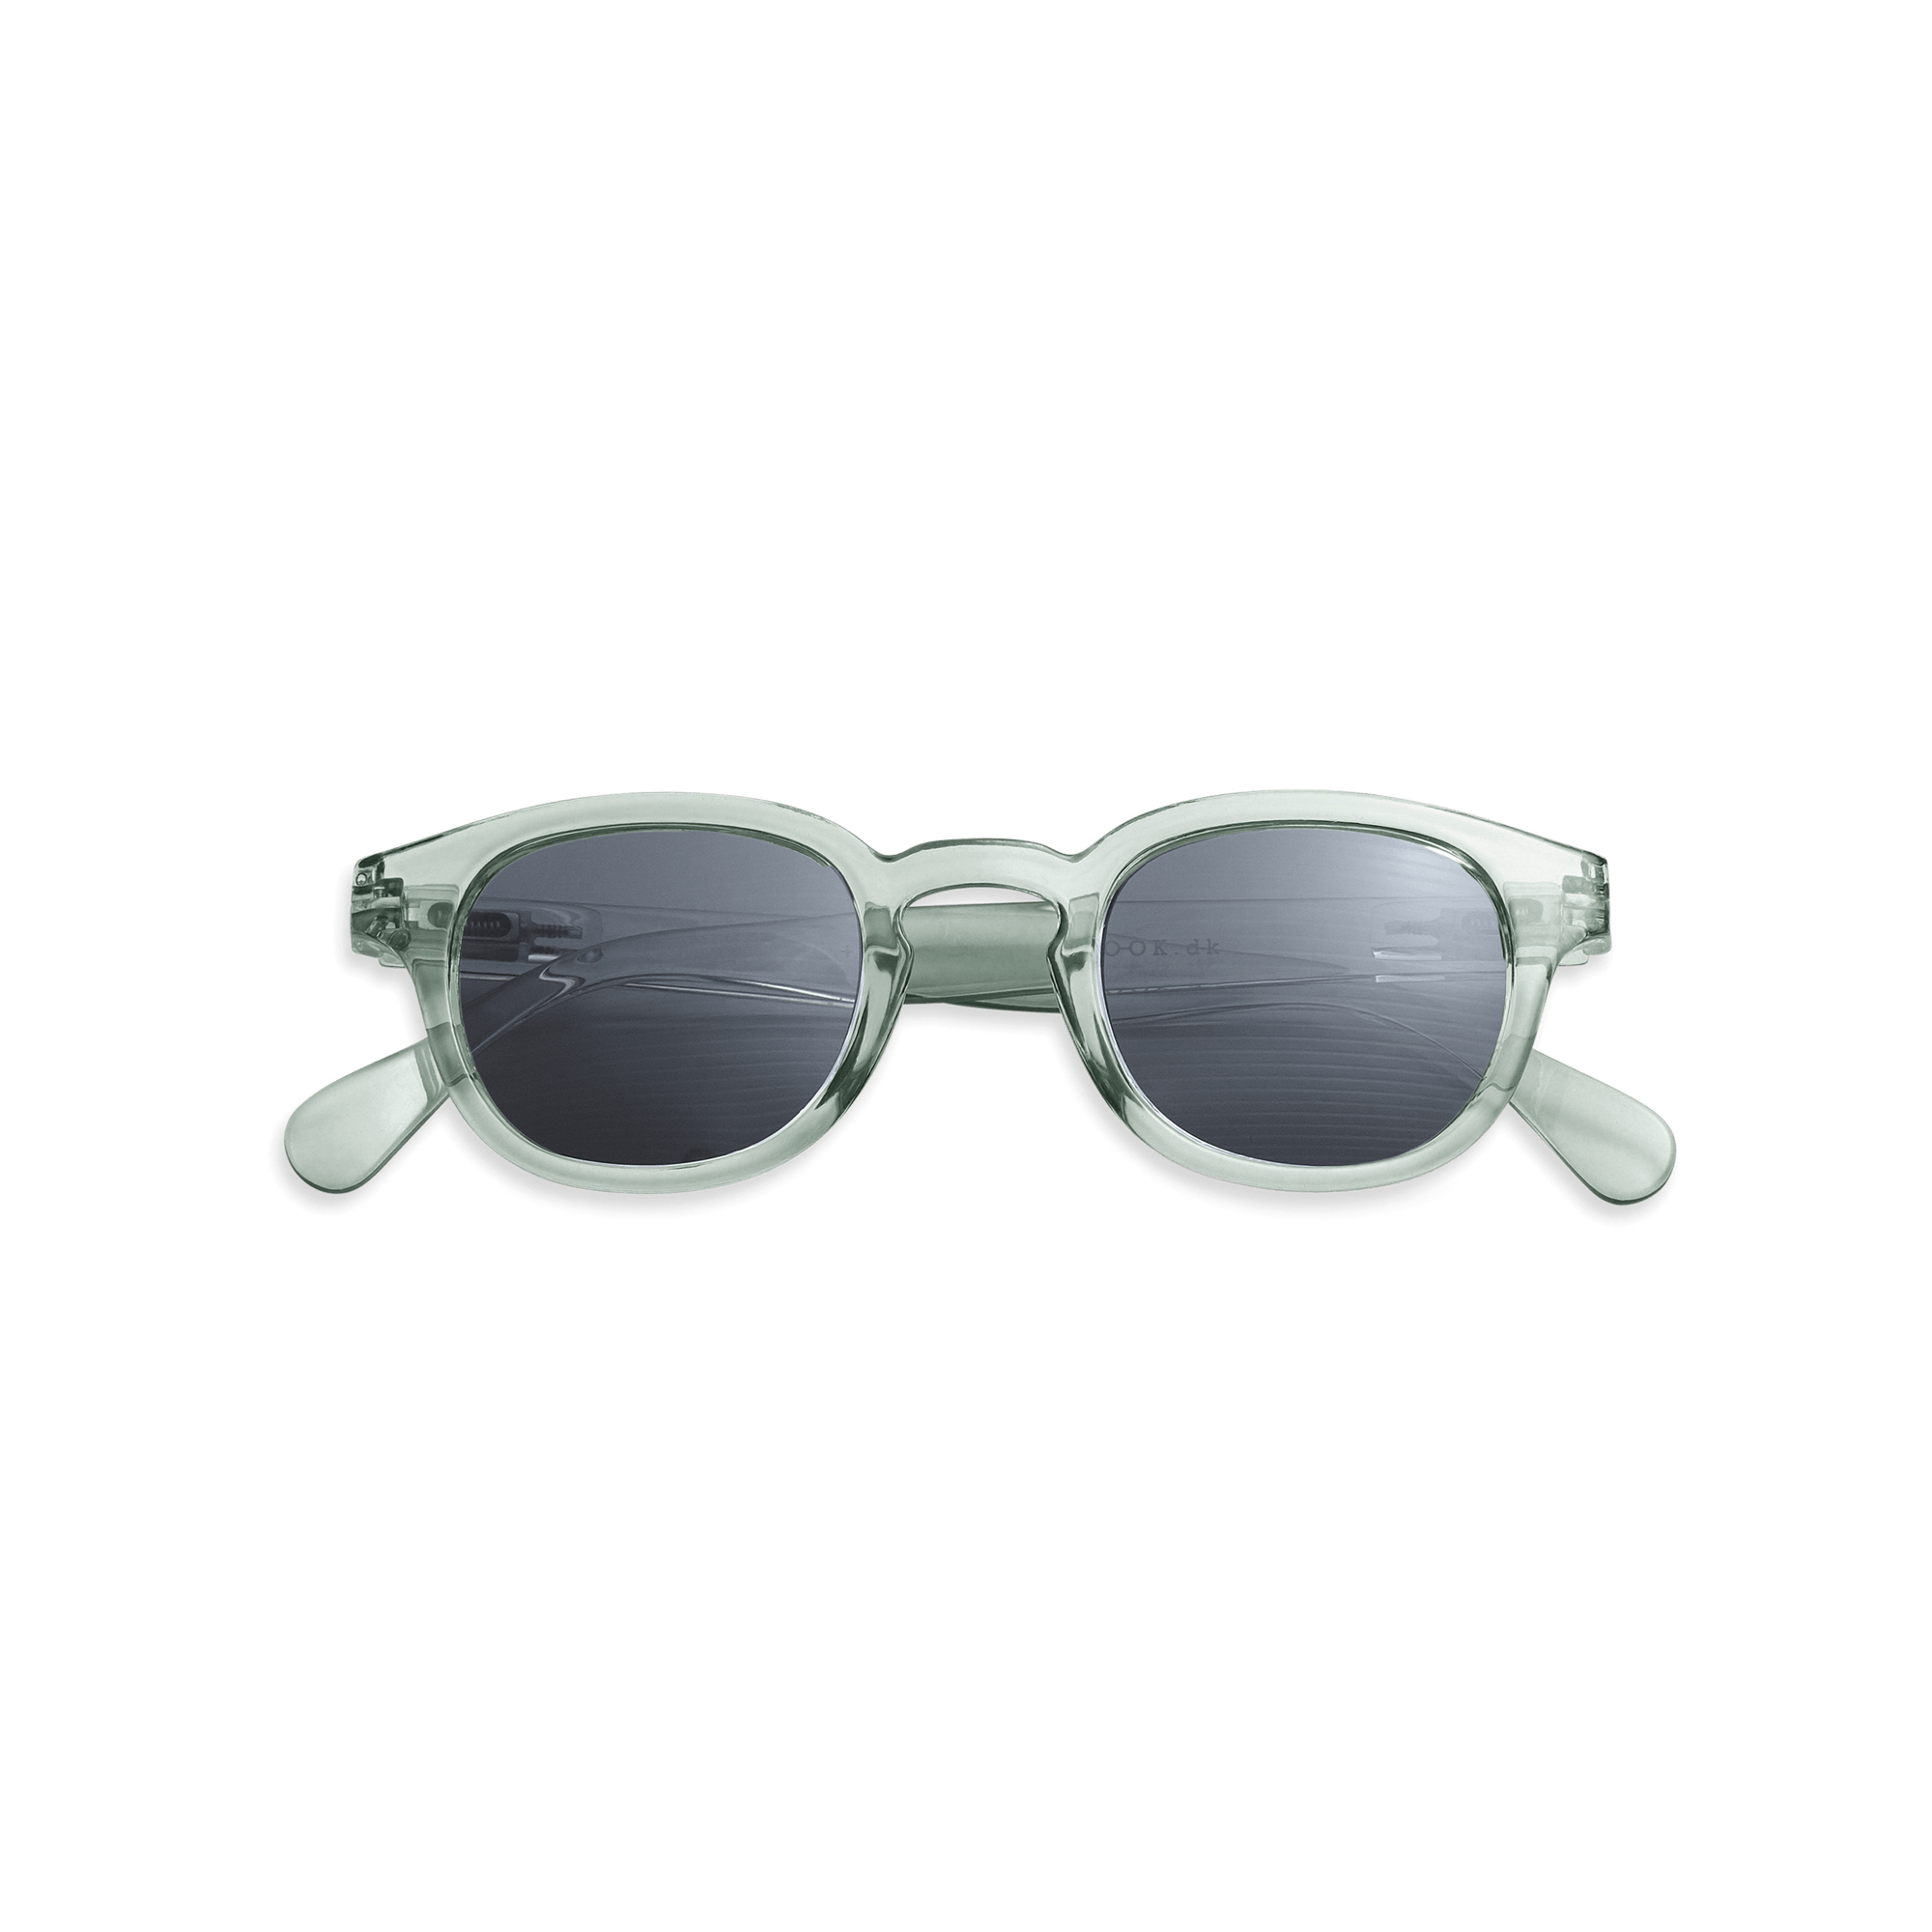 Minus-solbriller Type C - grass